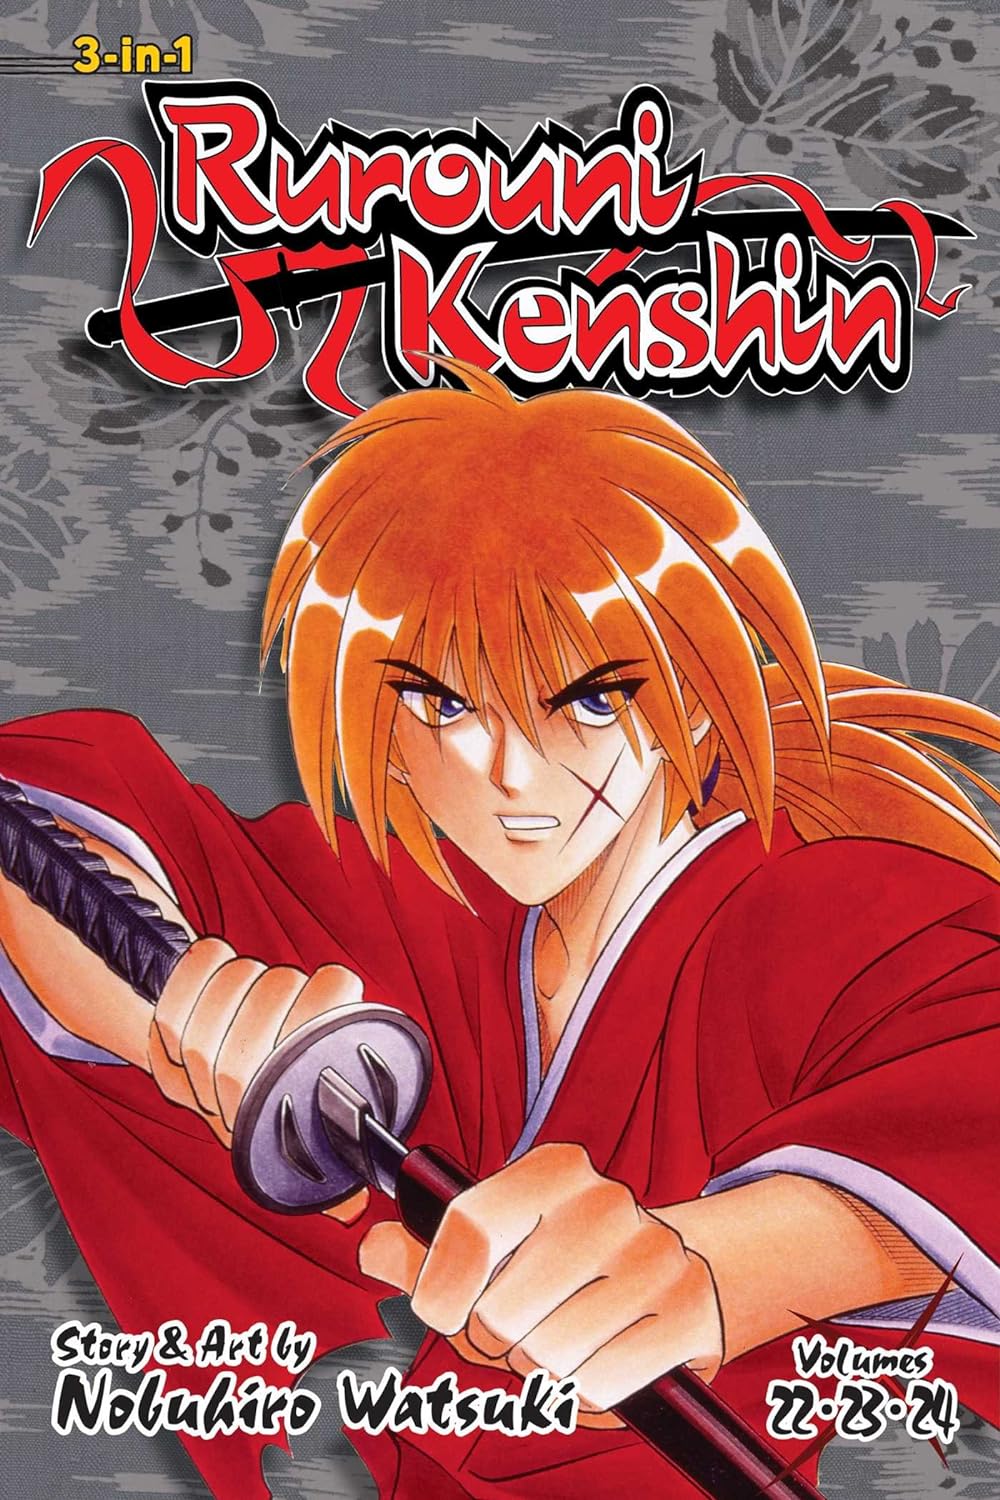 Rurouni Kenshin Volume 22-24 (3-in-1 Edition)